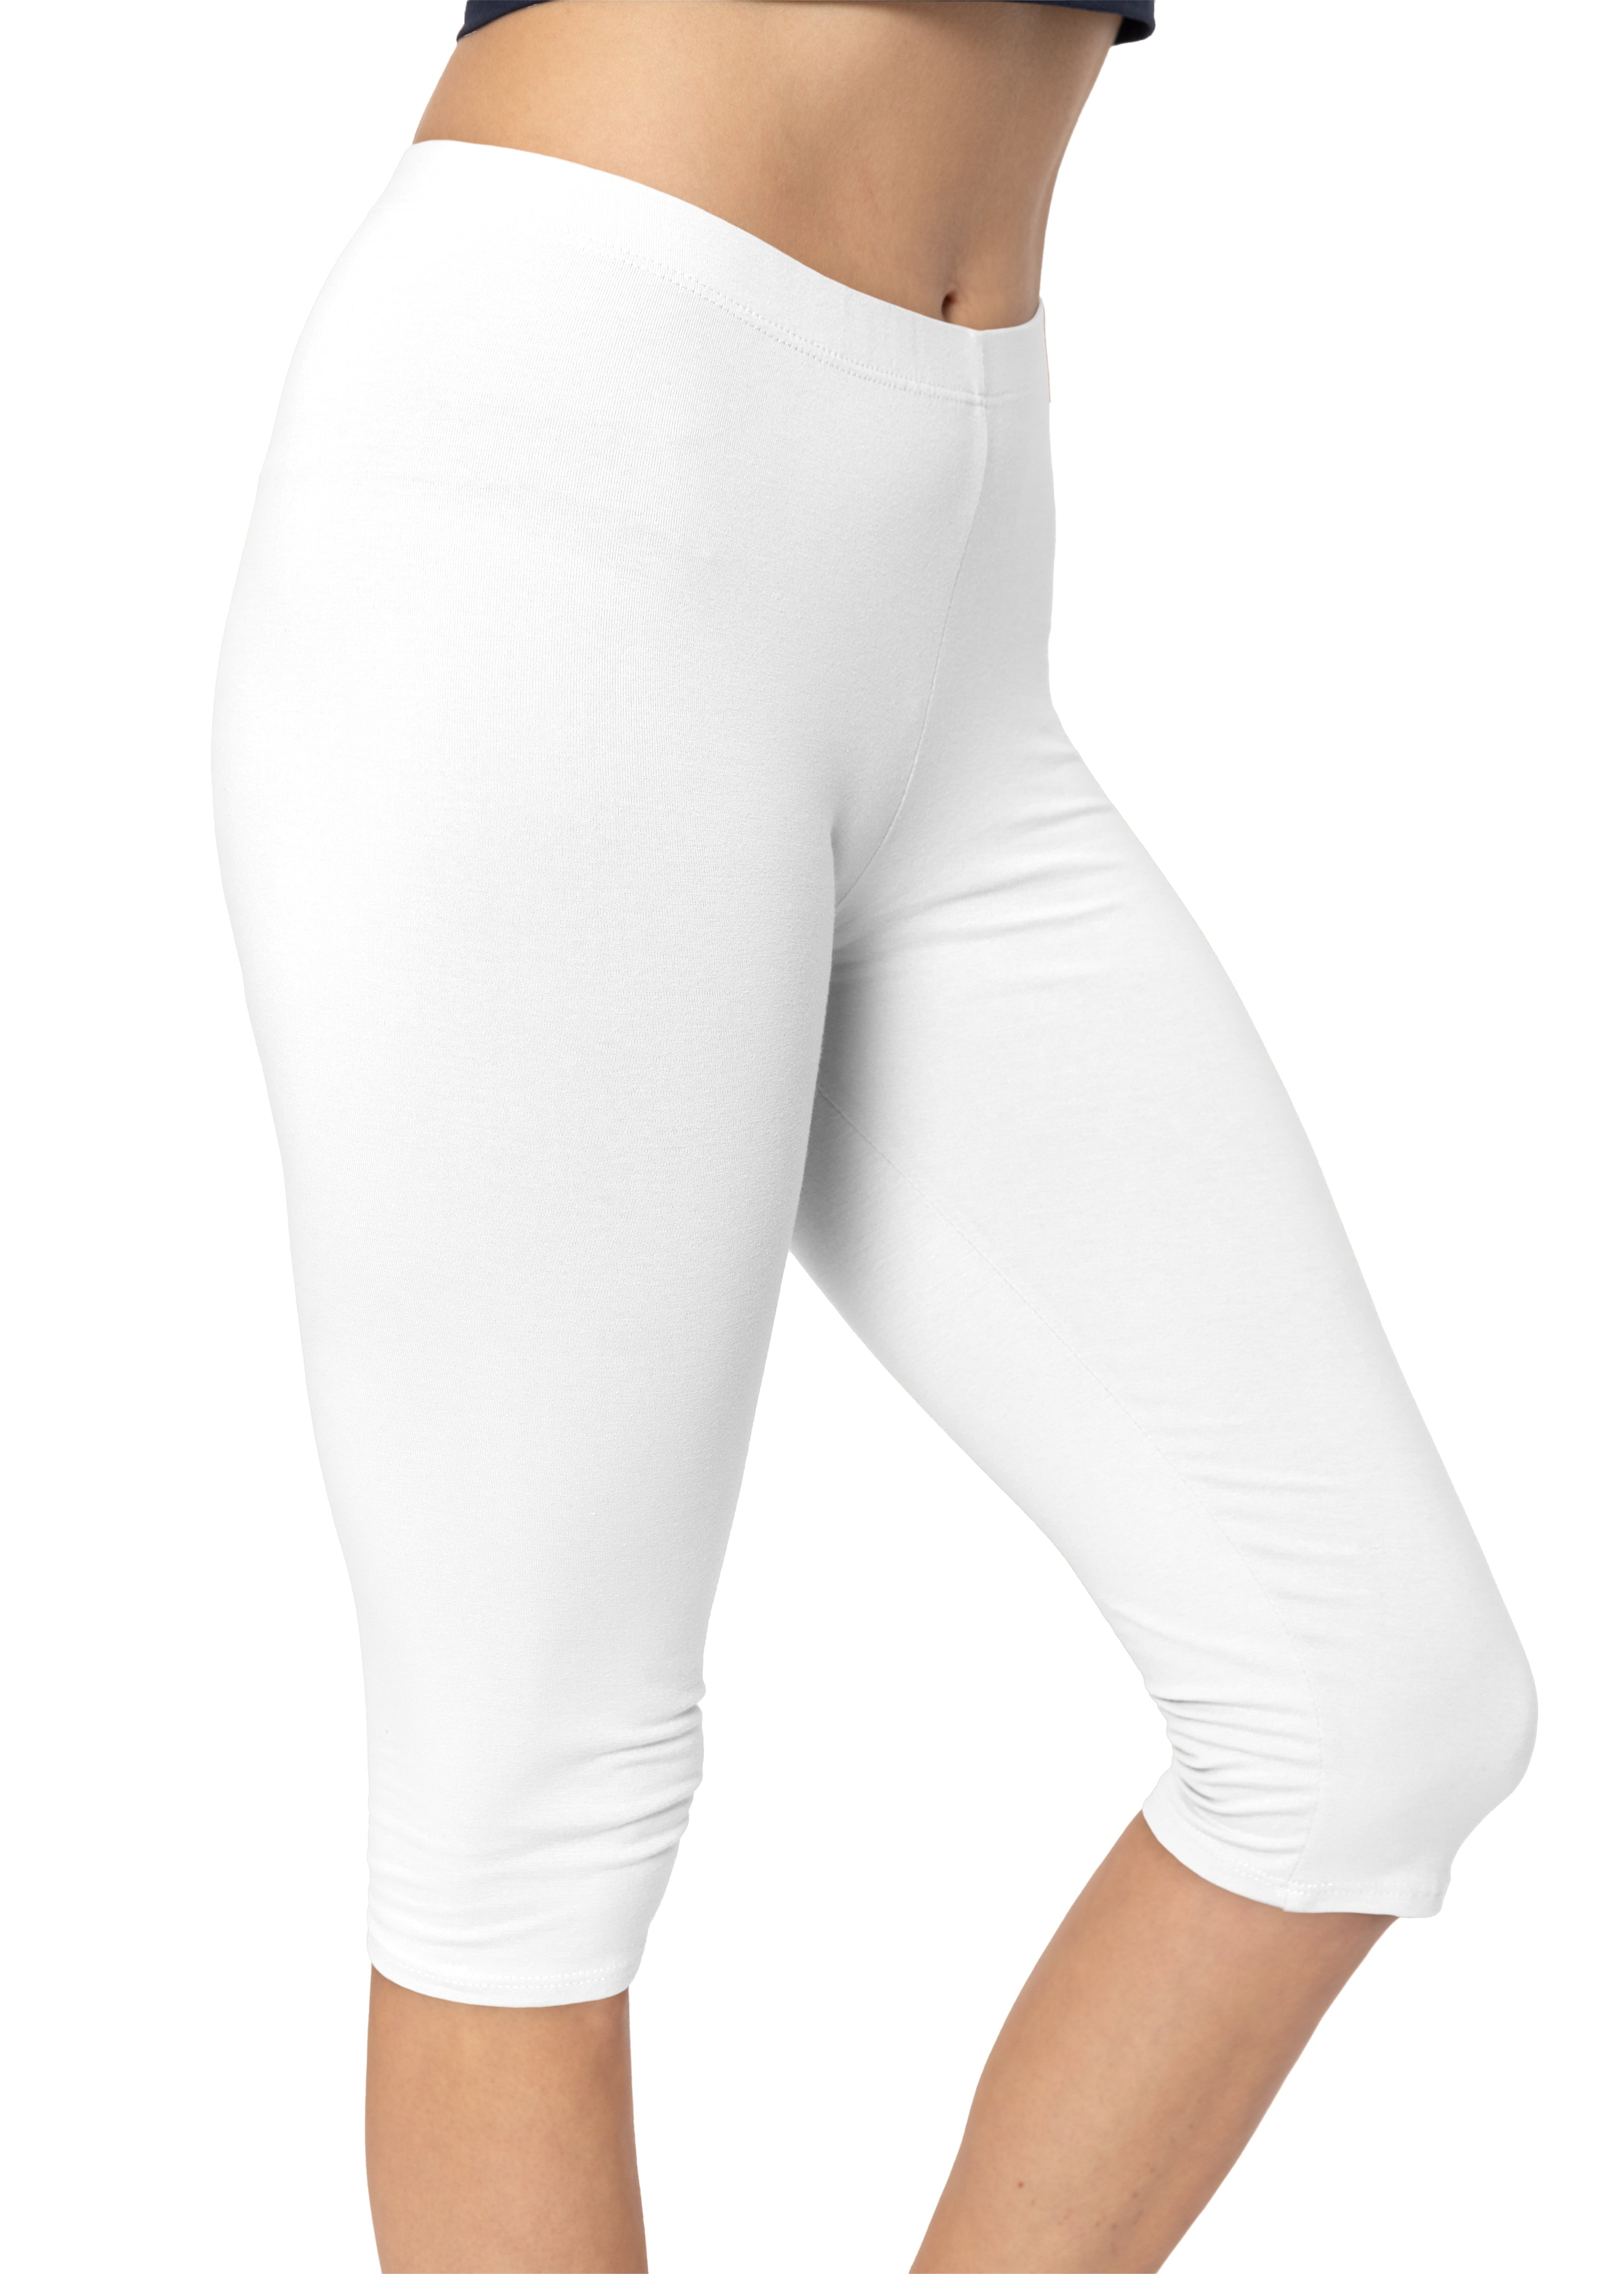 Made in USA Girls’ Activewear Dance Leggings Workout Pants for Gymnastics Yoga 